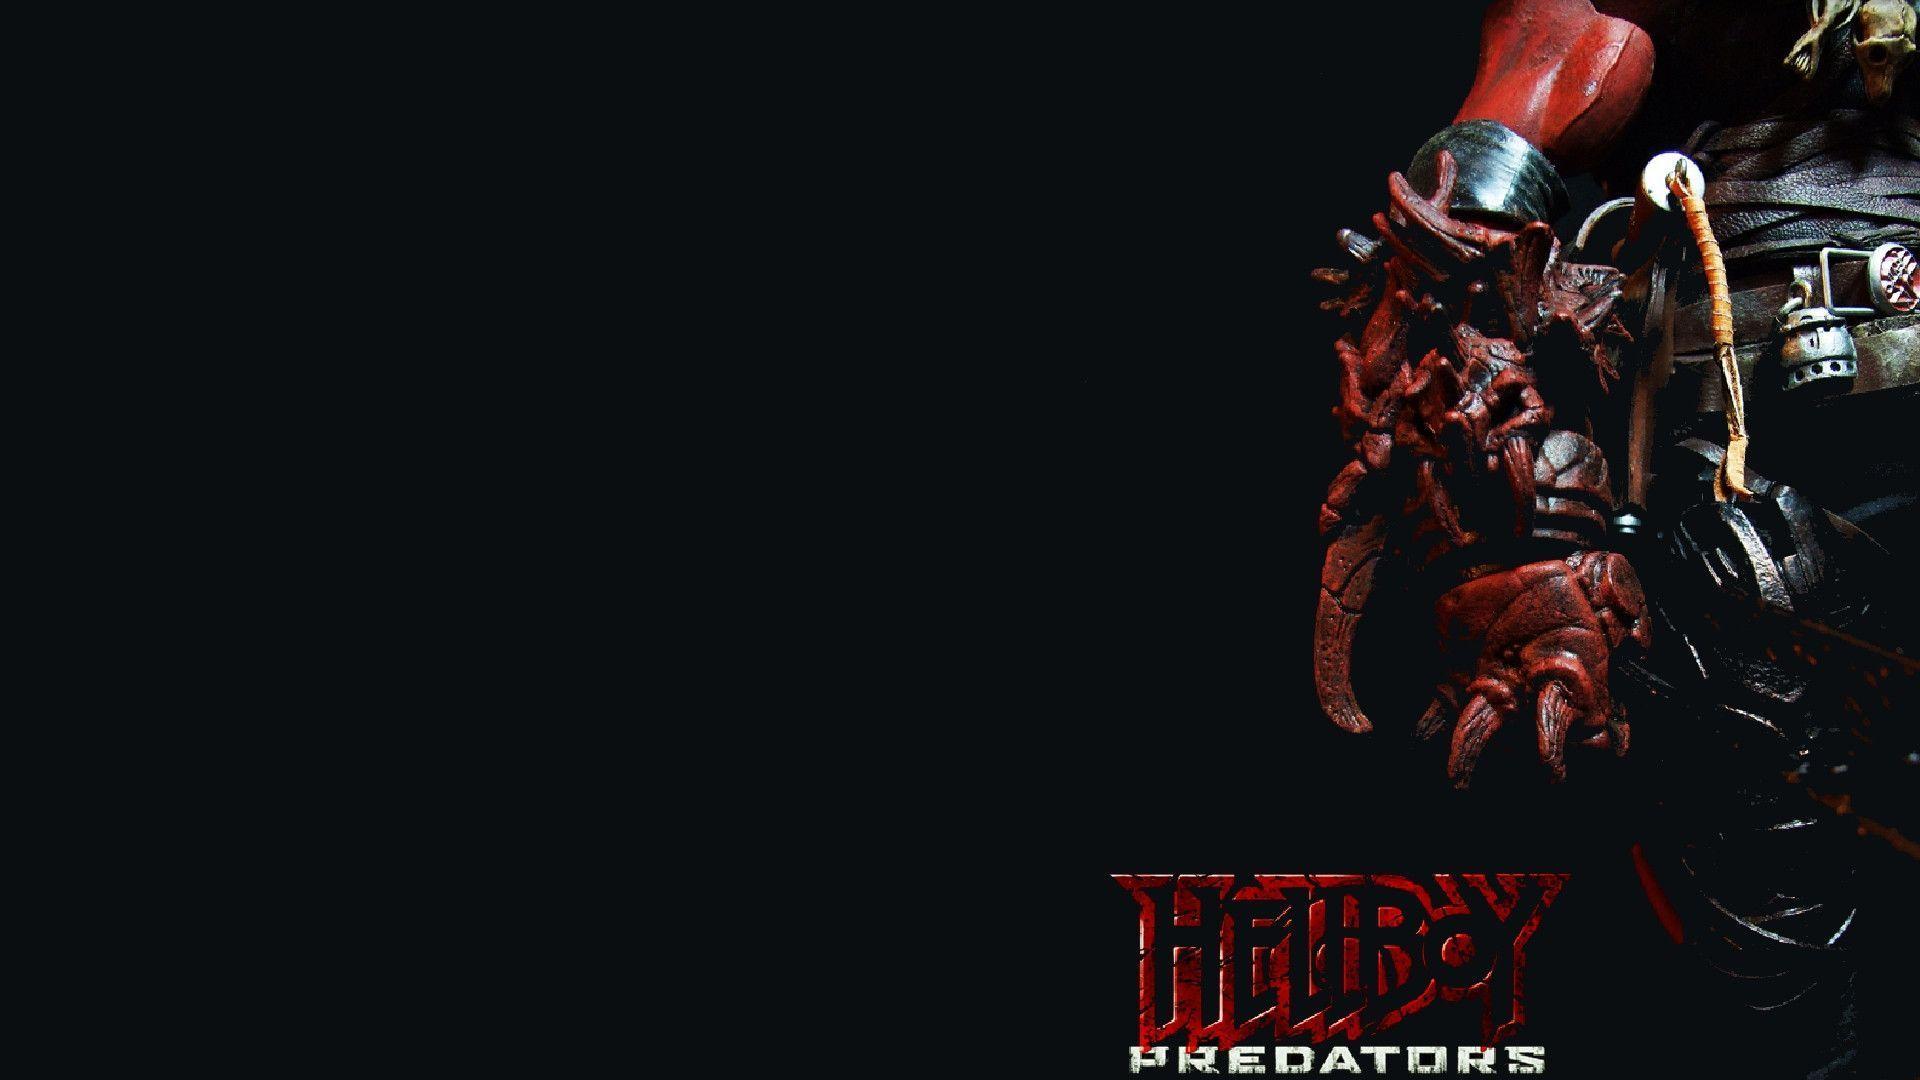 Hellboy Computer Wallpaper, Desktop Background 1920x1080 Id: 469780